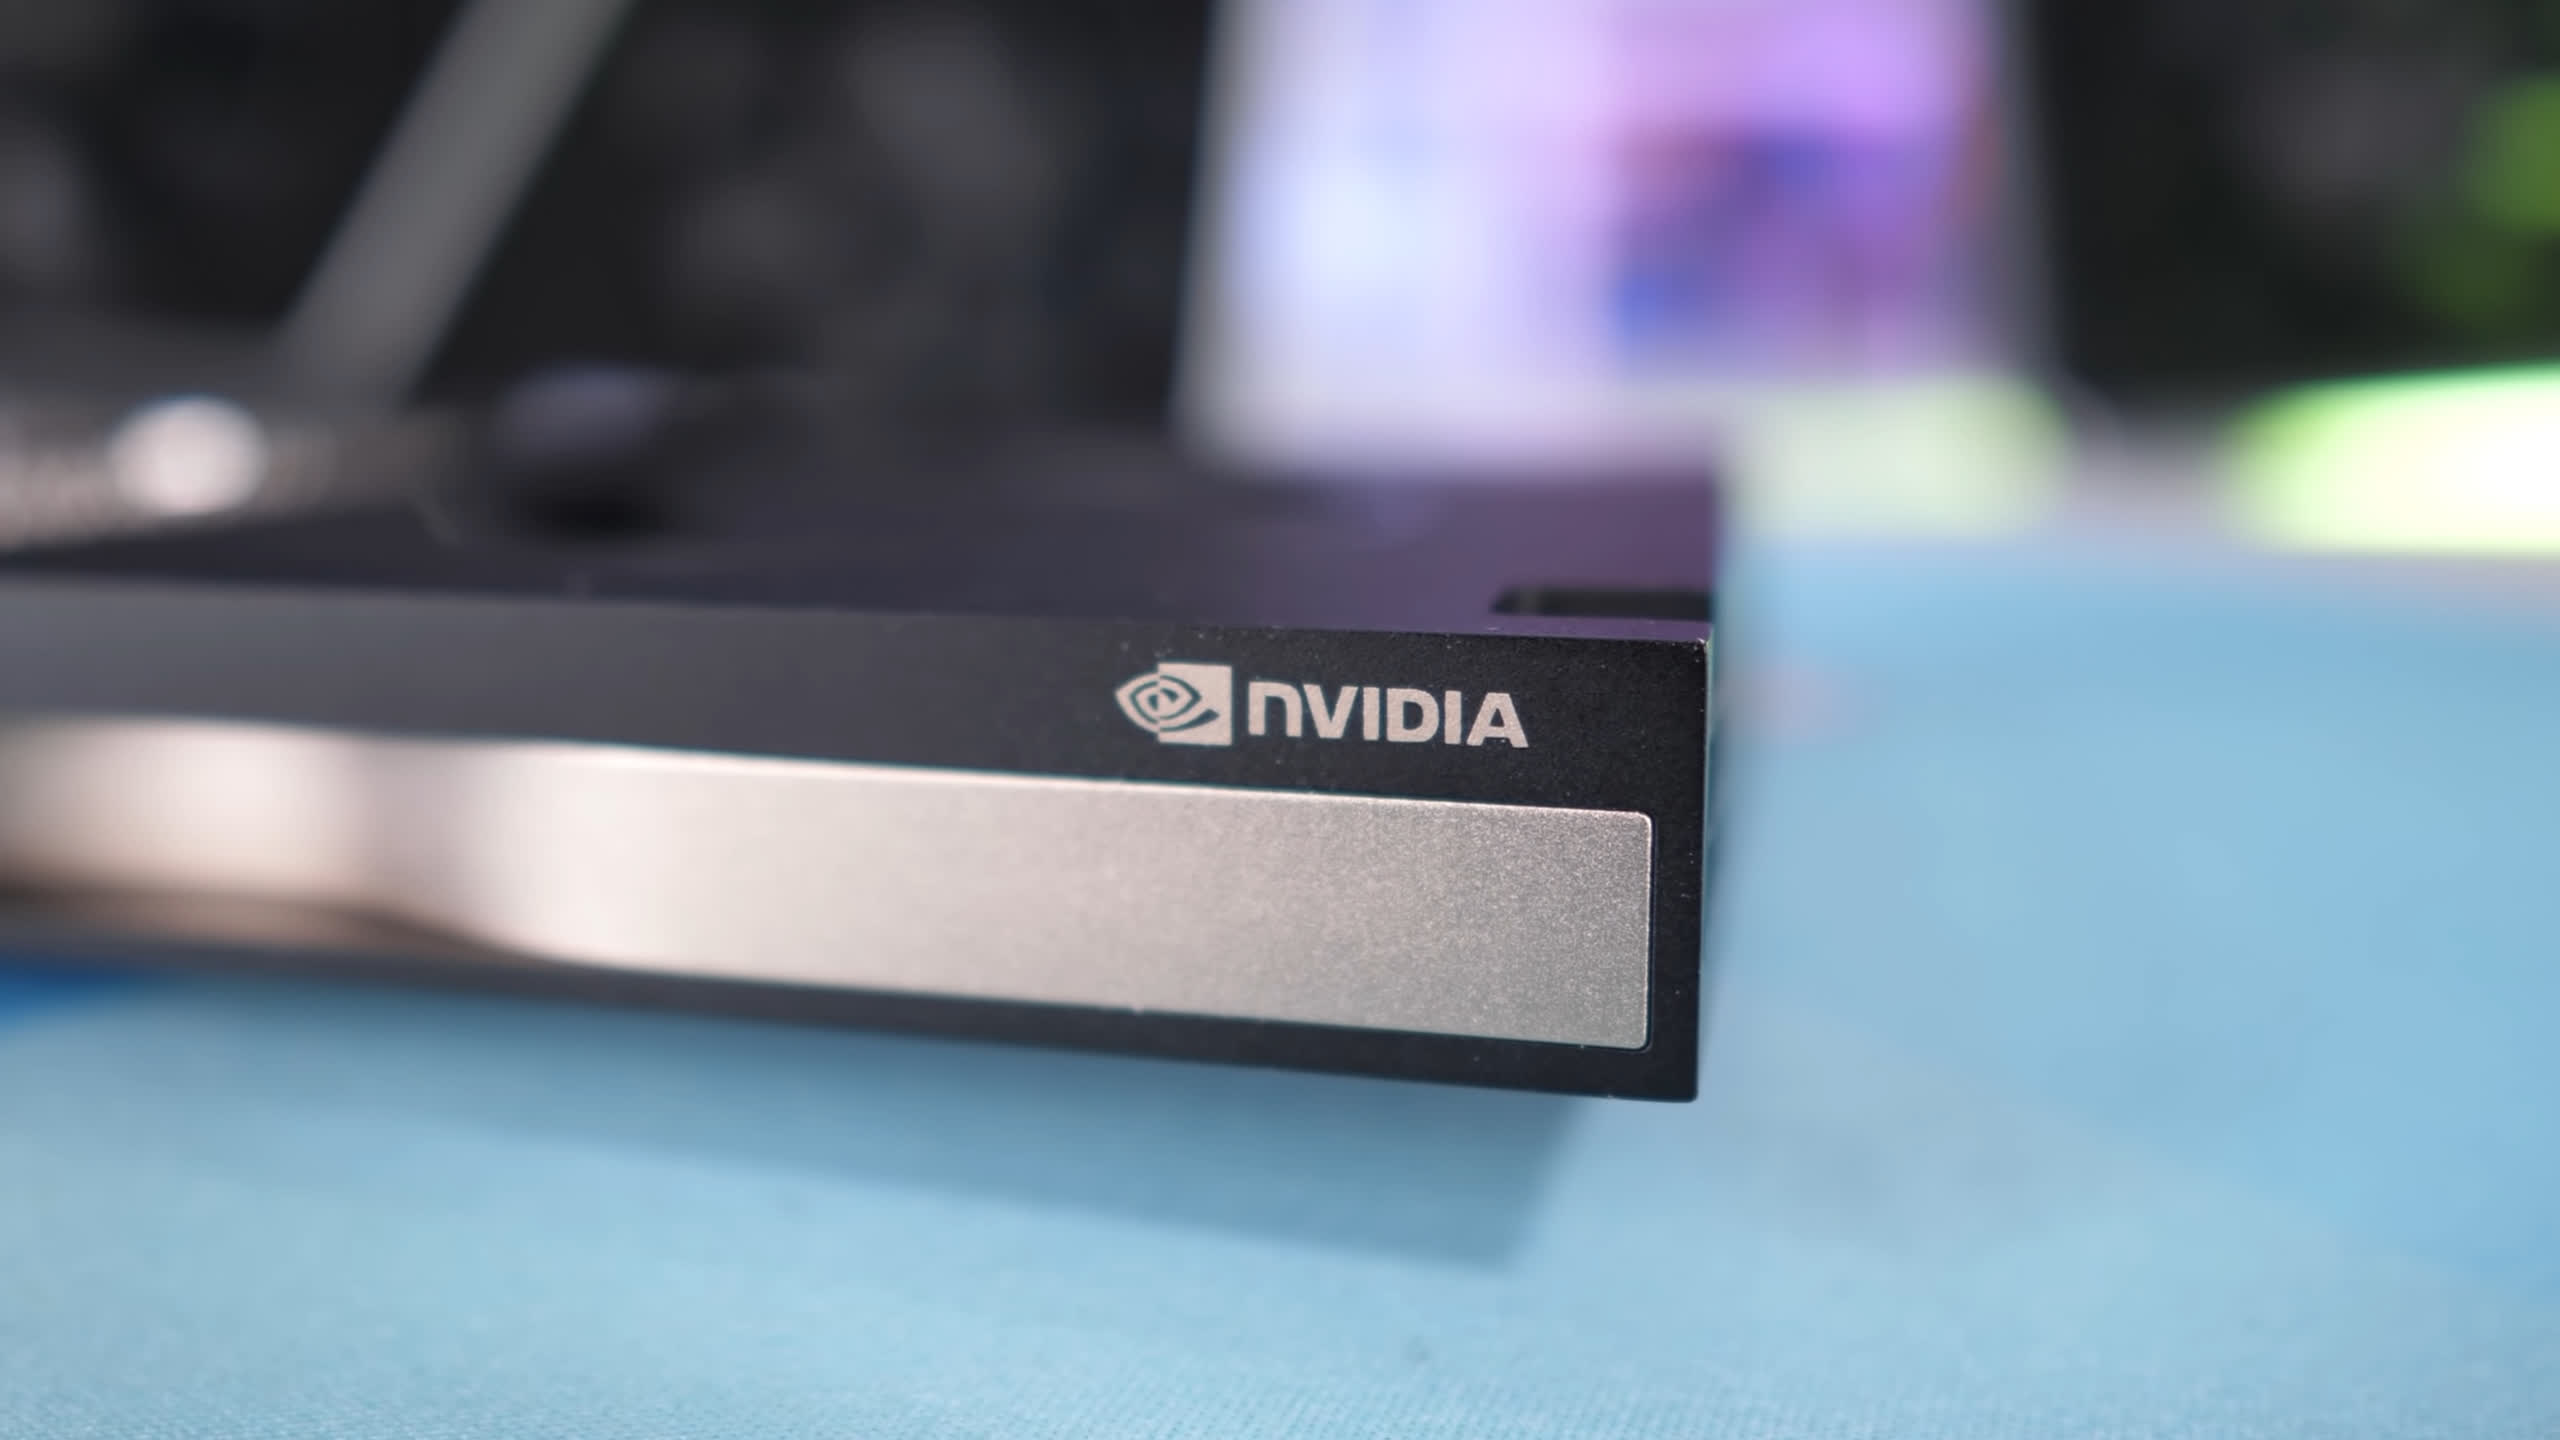 Nvidia RTX A4000 Review | TechSpot